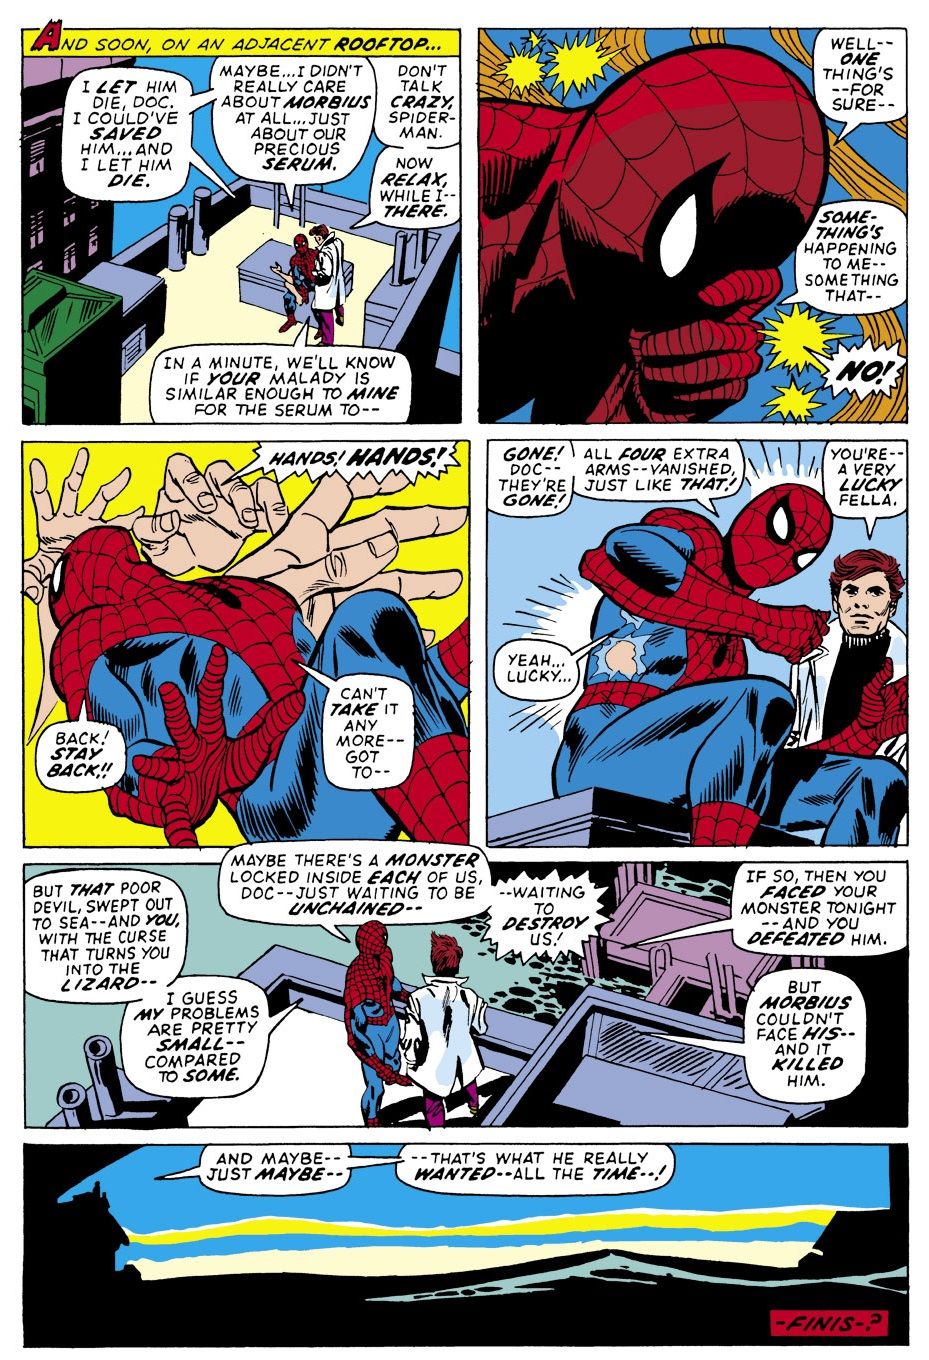 How Morbius Resolved Spider-Man's Six Arms Saga